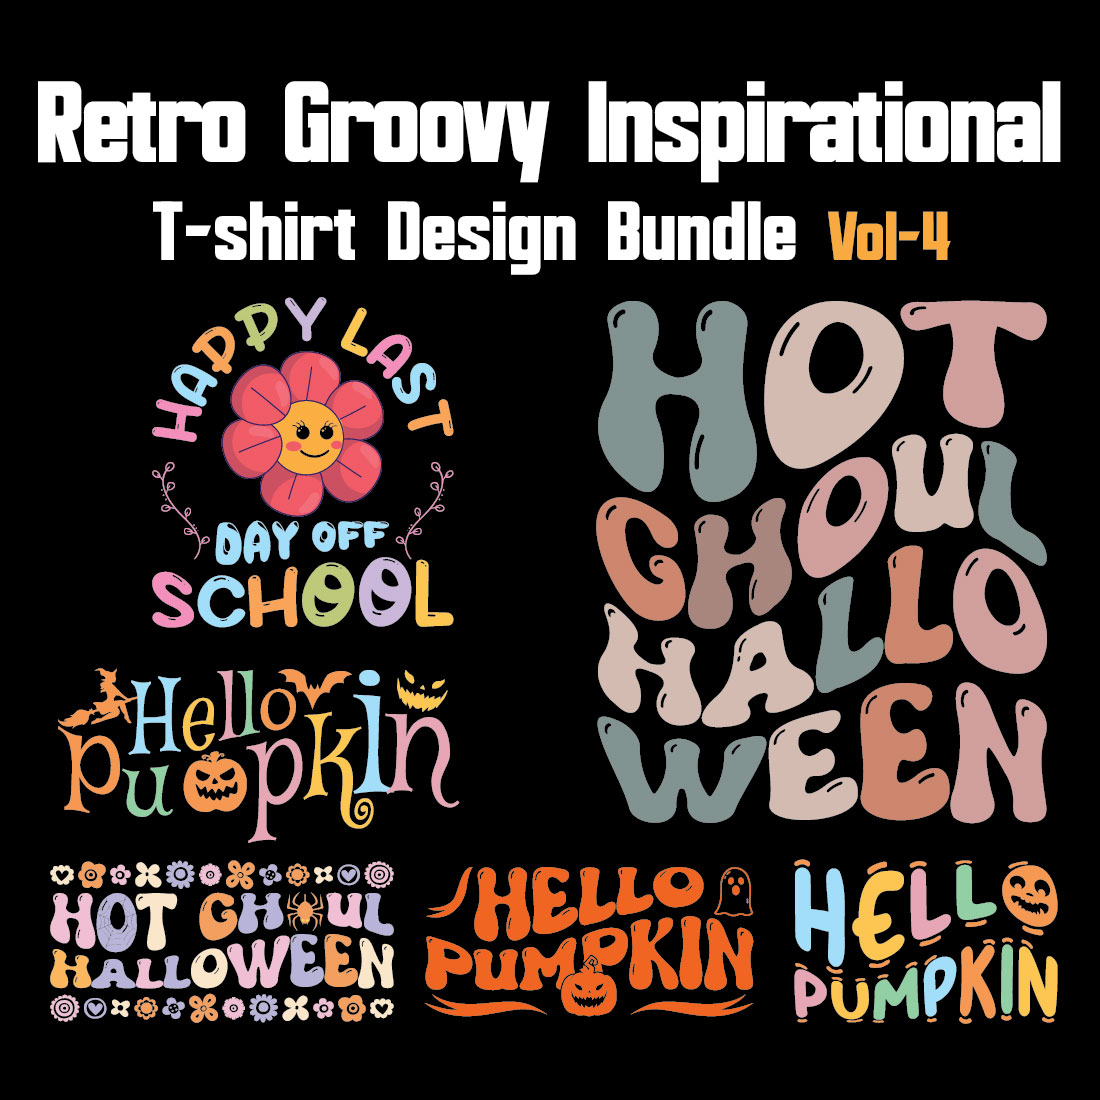 Retro Groovy Inspirational T-shirt Design Bundle Vol-4 cover image.